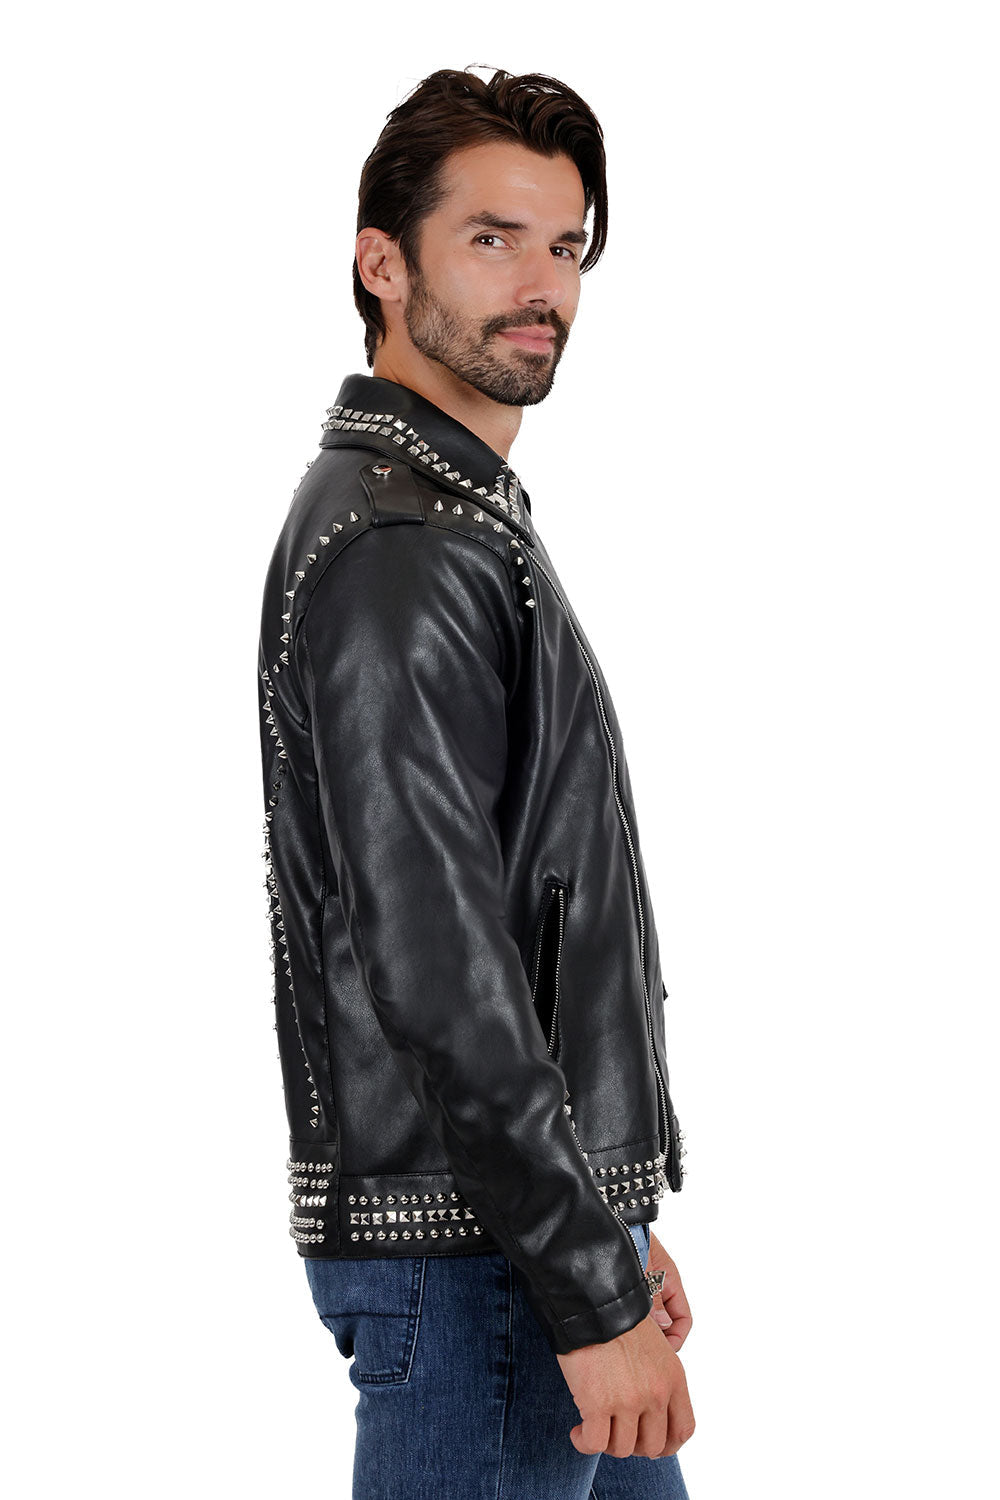 Barabas Men's Spiked Premium Motorcycle Biker Jacket 3JPU26 Black and Silver